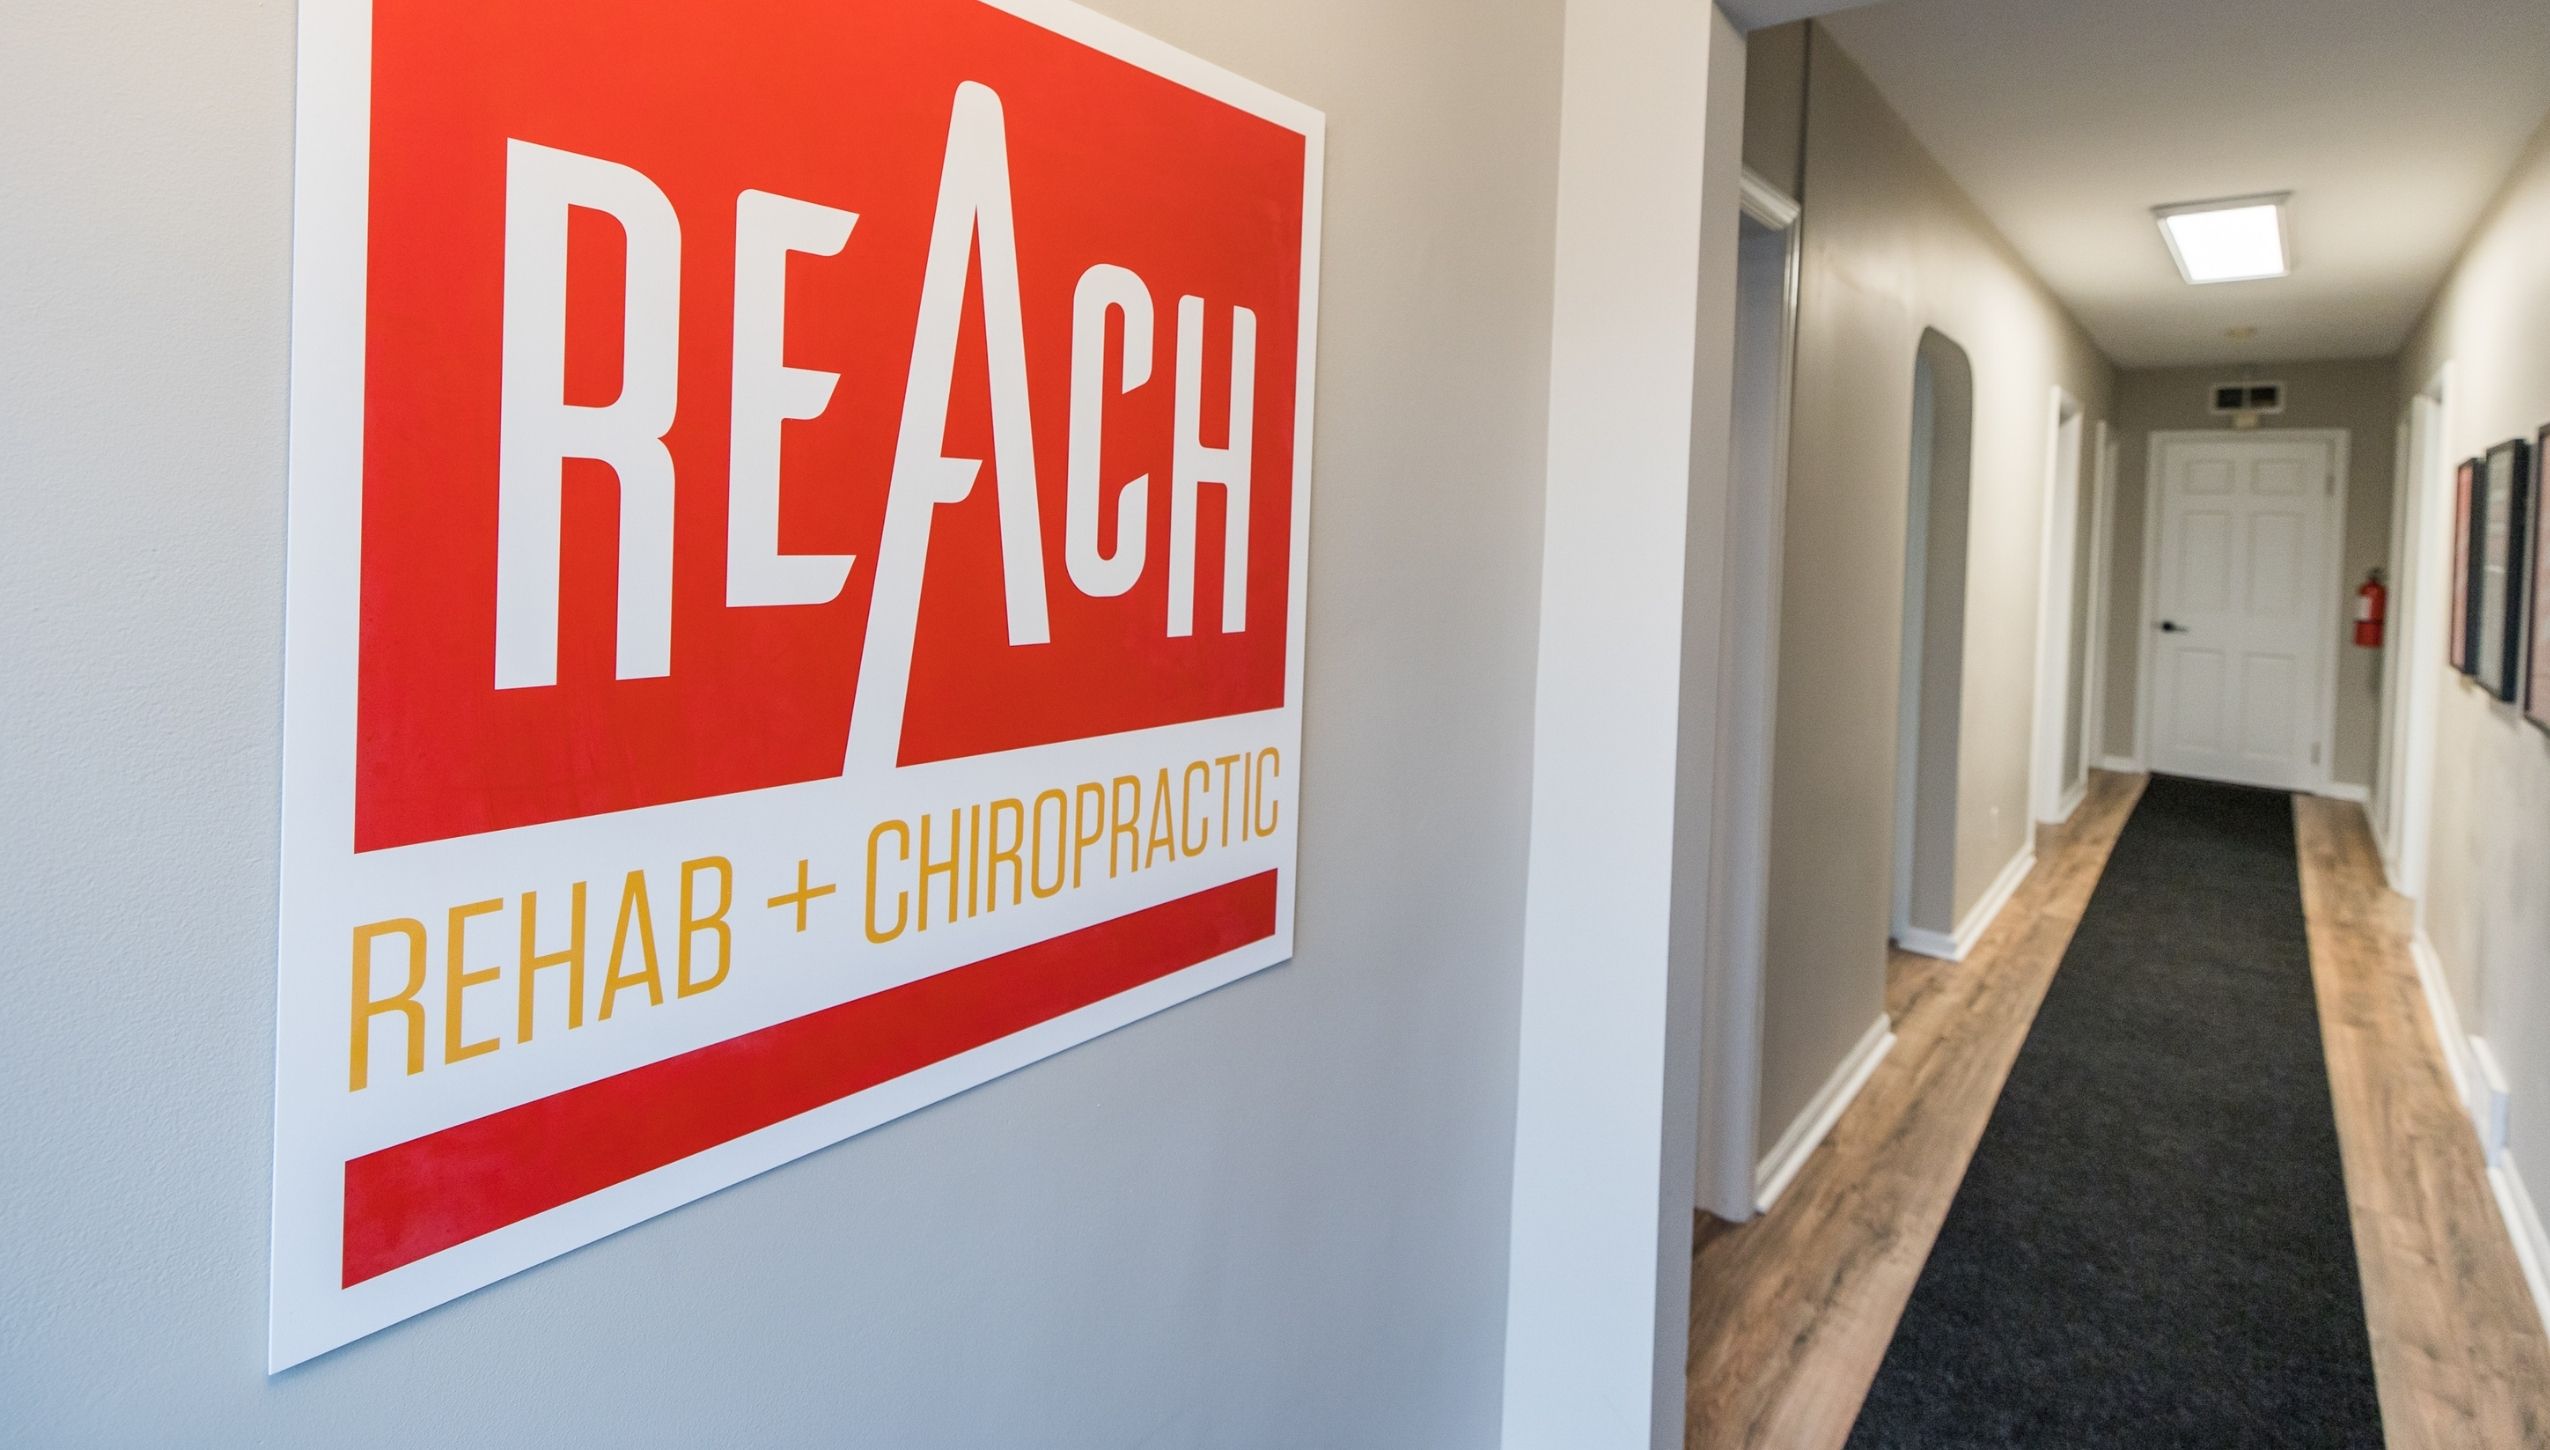 REACH Rehab Sign In Hallway | Chiropractor Near Ann Arbor, MI